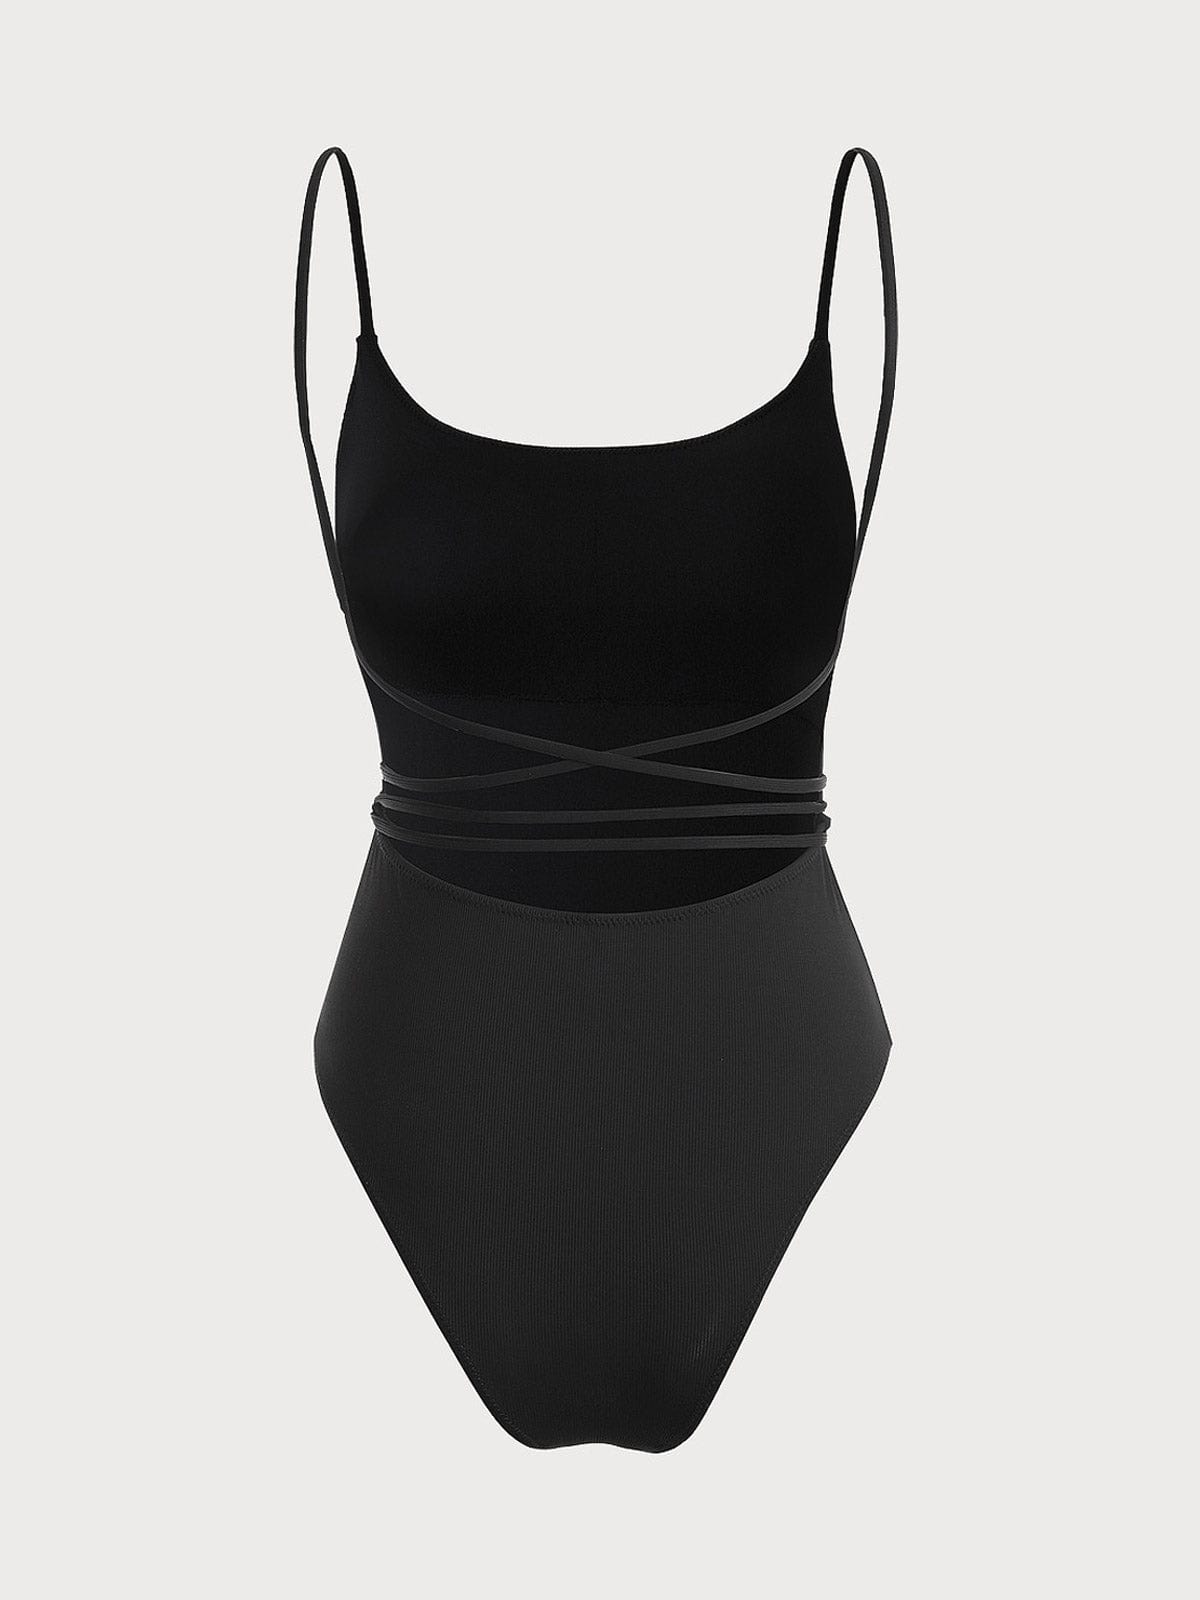 Nike Swimsuit One Piece Women’s 10 Athletic Bathing Suit Open Back Black +  Blue